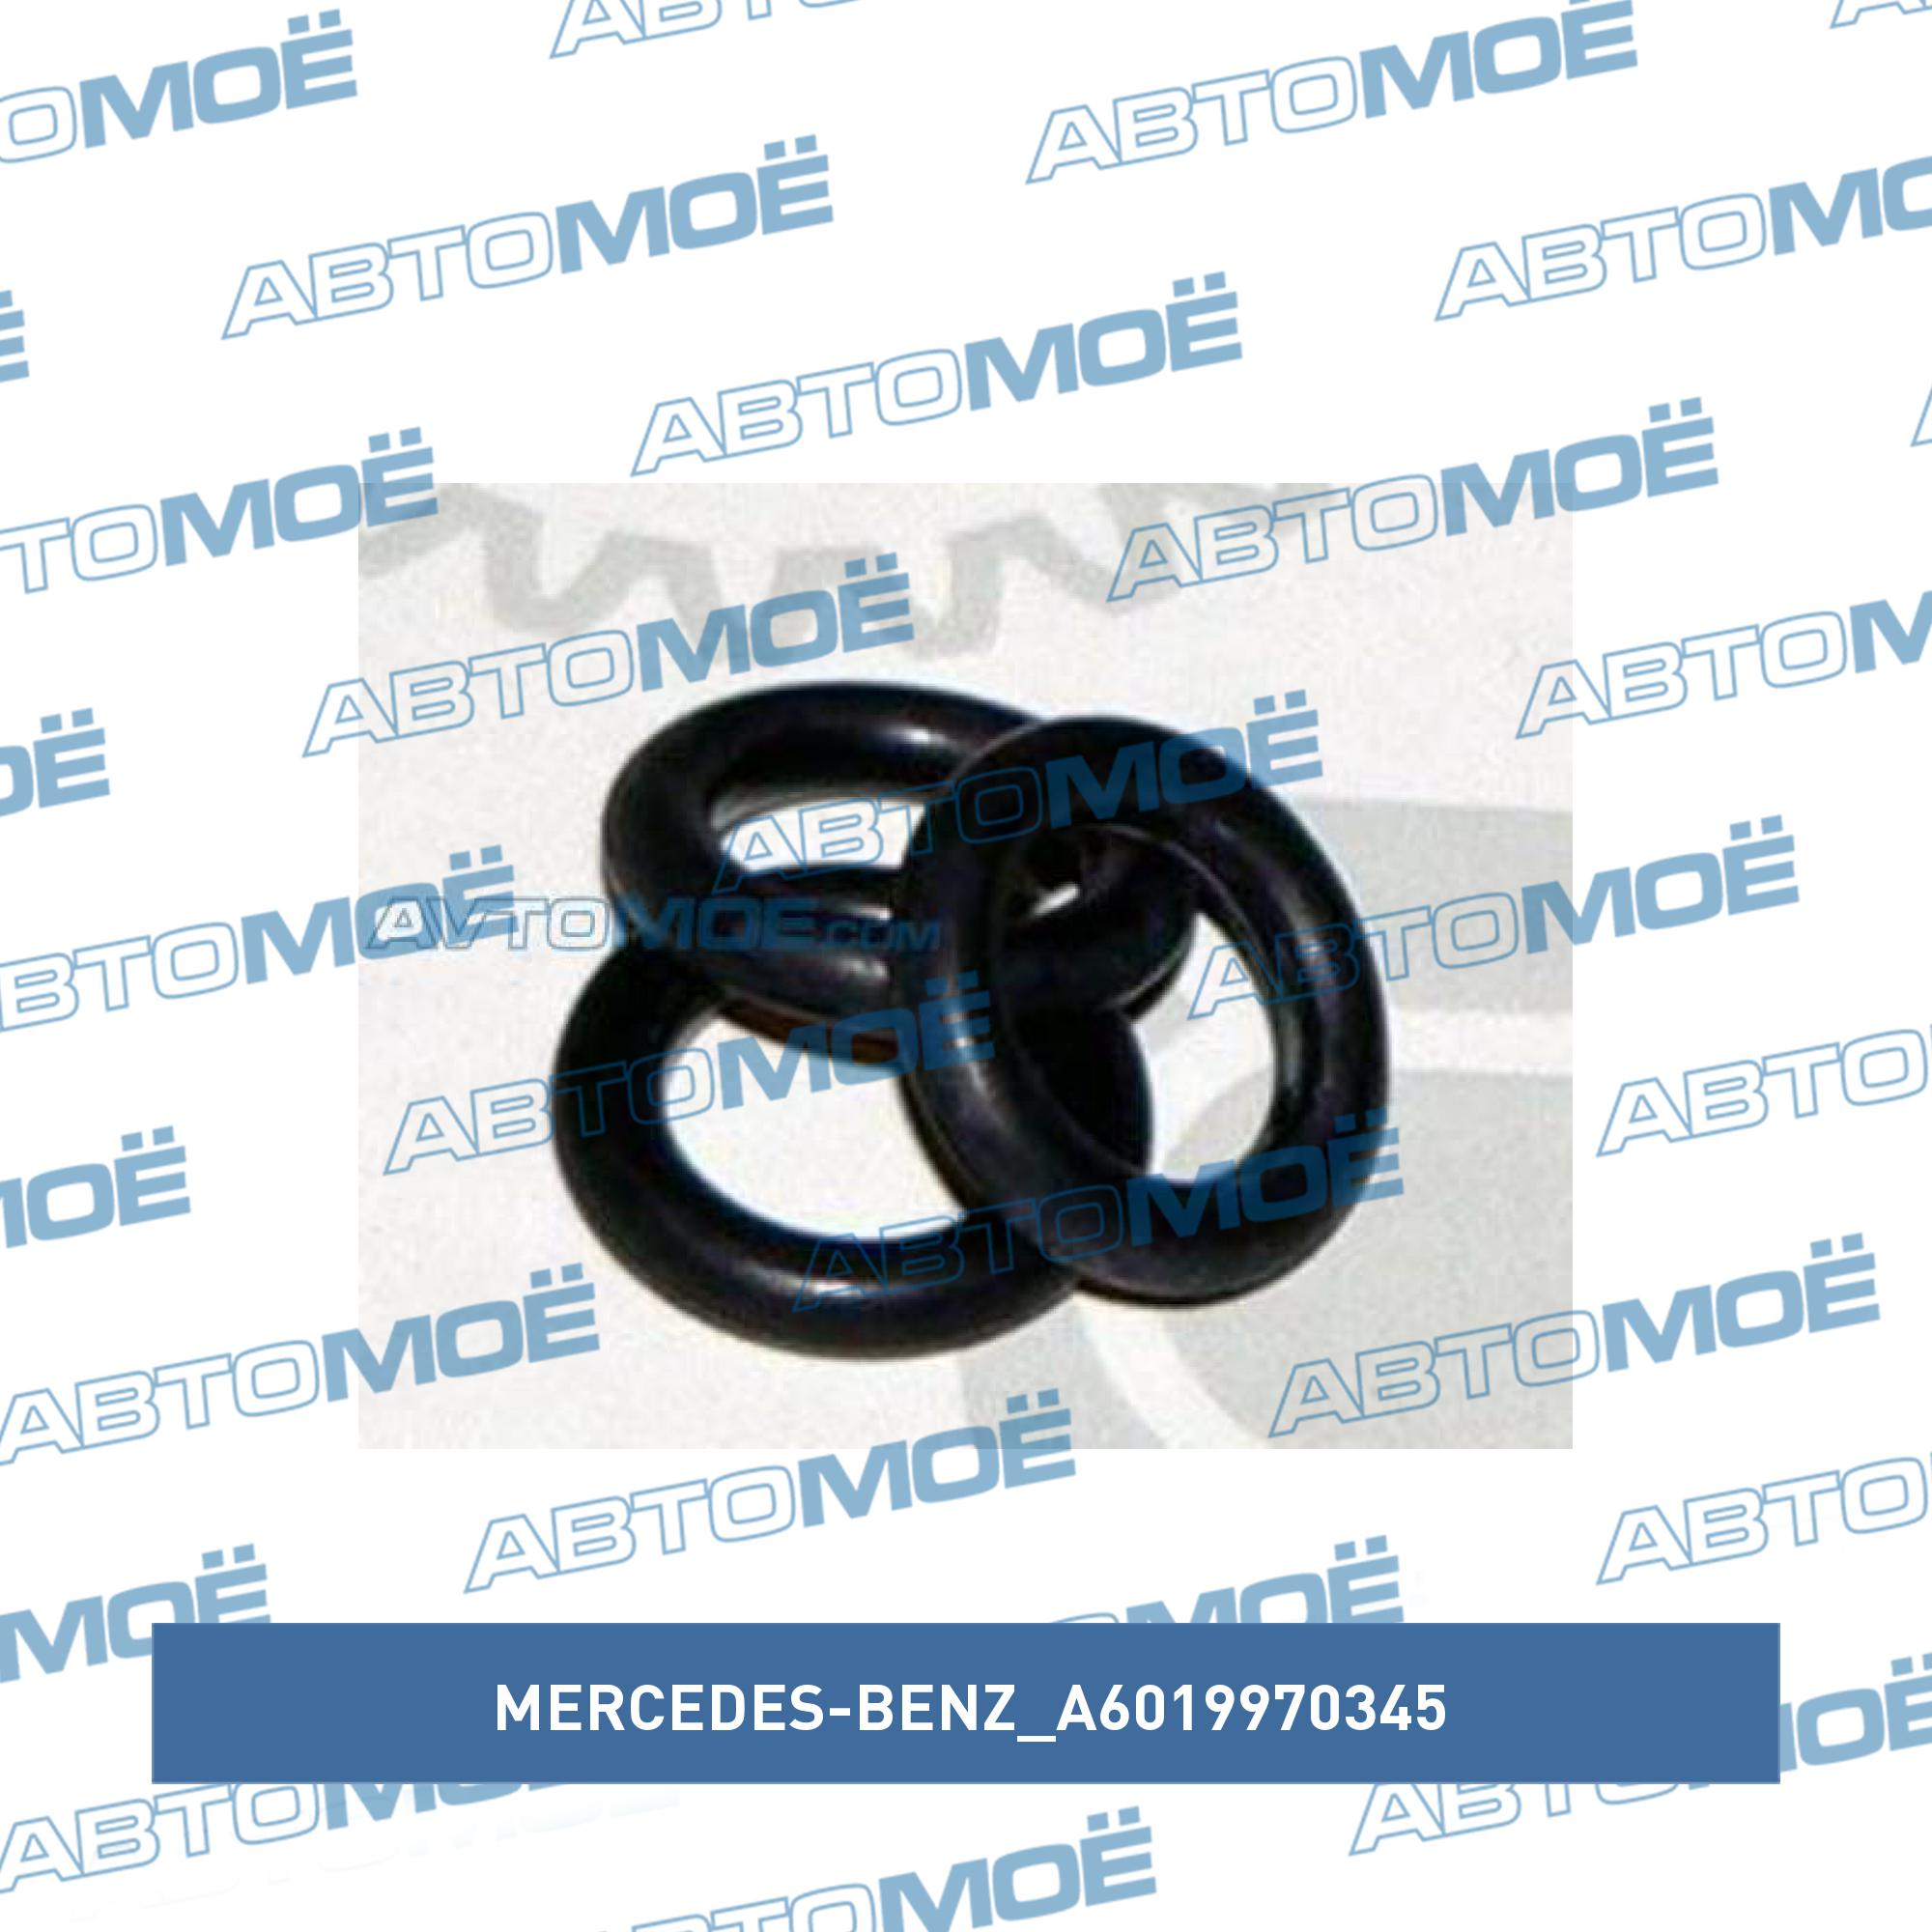 Прокладка топливной трубки MERCEDES-BENZ A6019970345